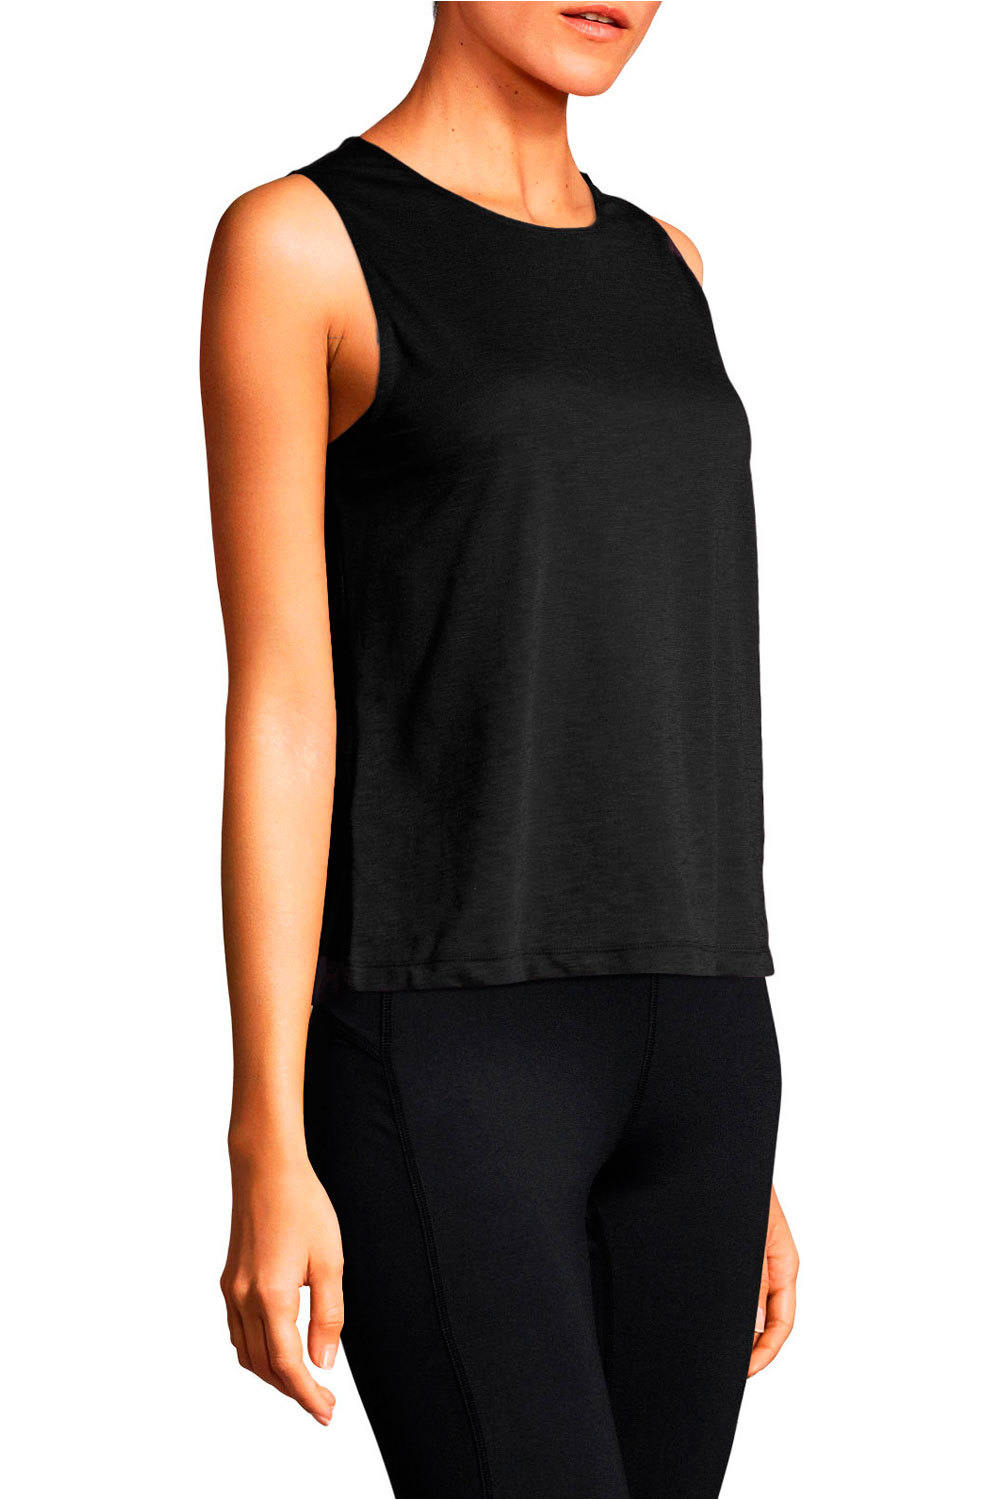 Casall Camiseta Tirantes Yoga Texture Tank vista detalle